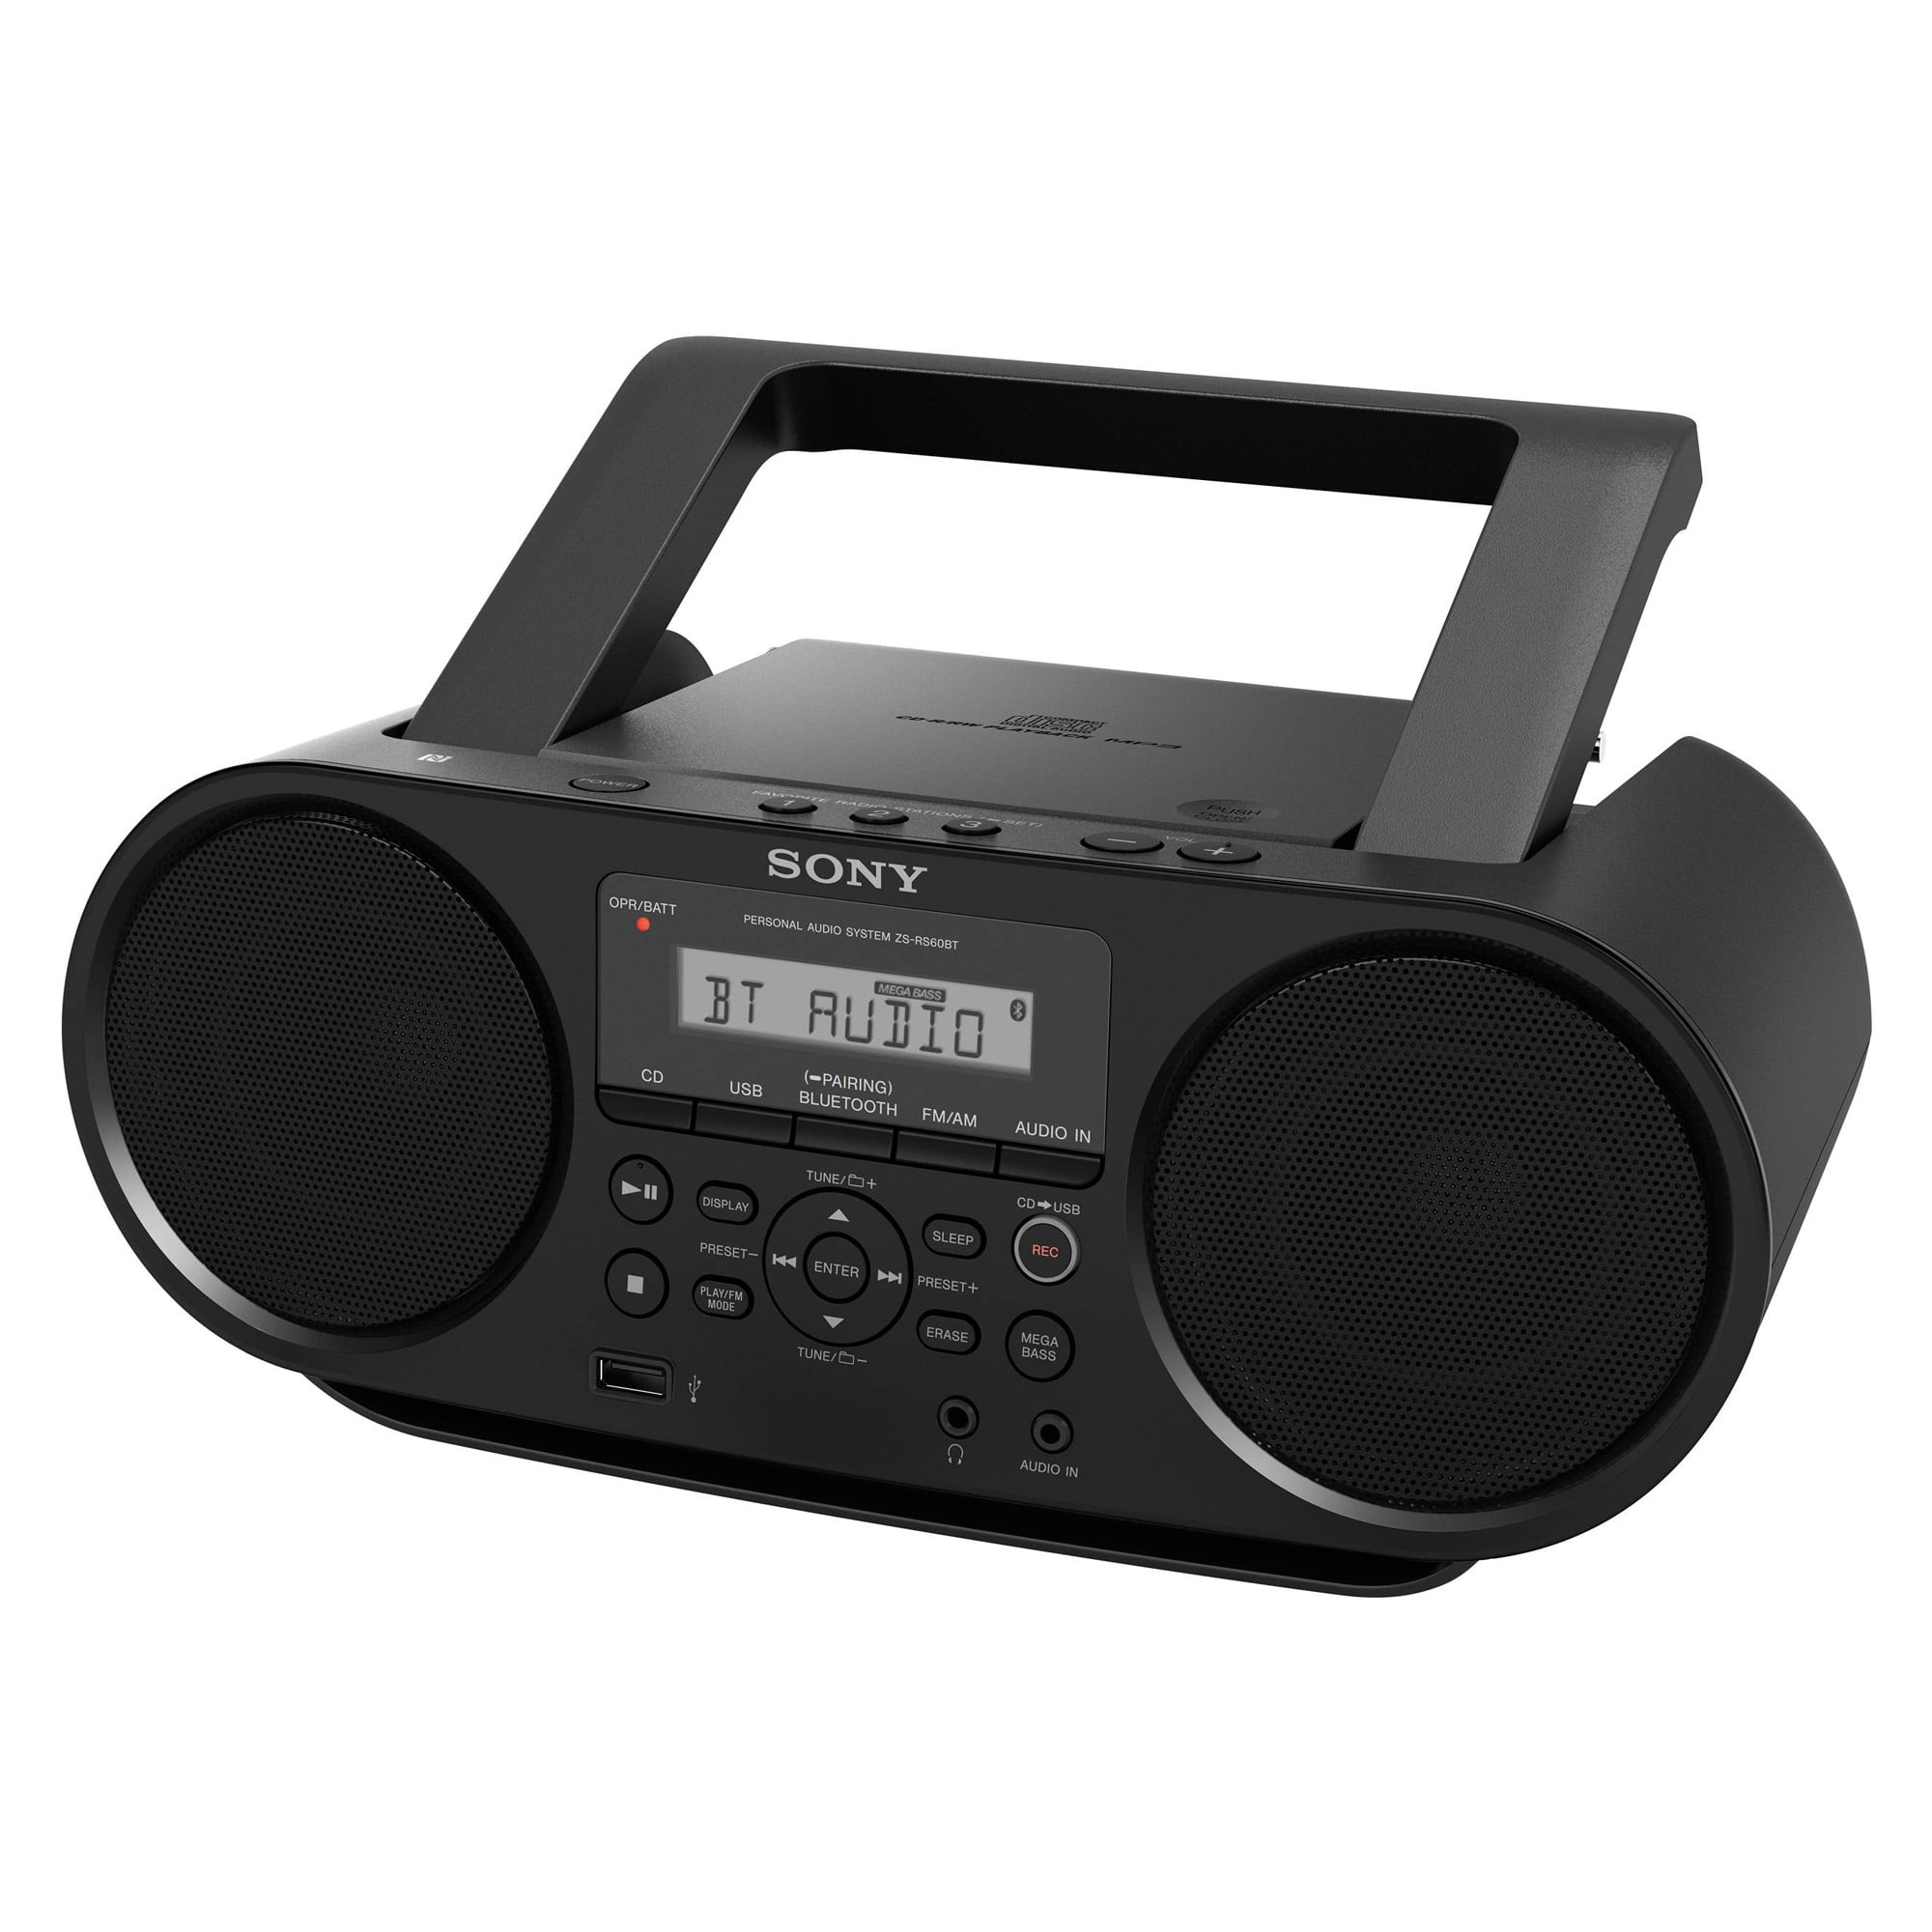 Gpx® Cd, Fm Radio, And Wireless Boombox. : Target